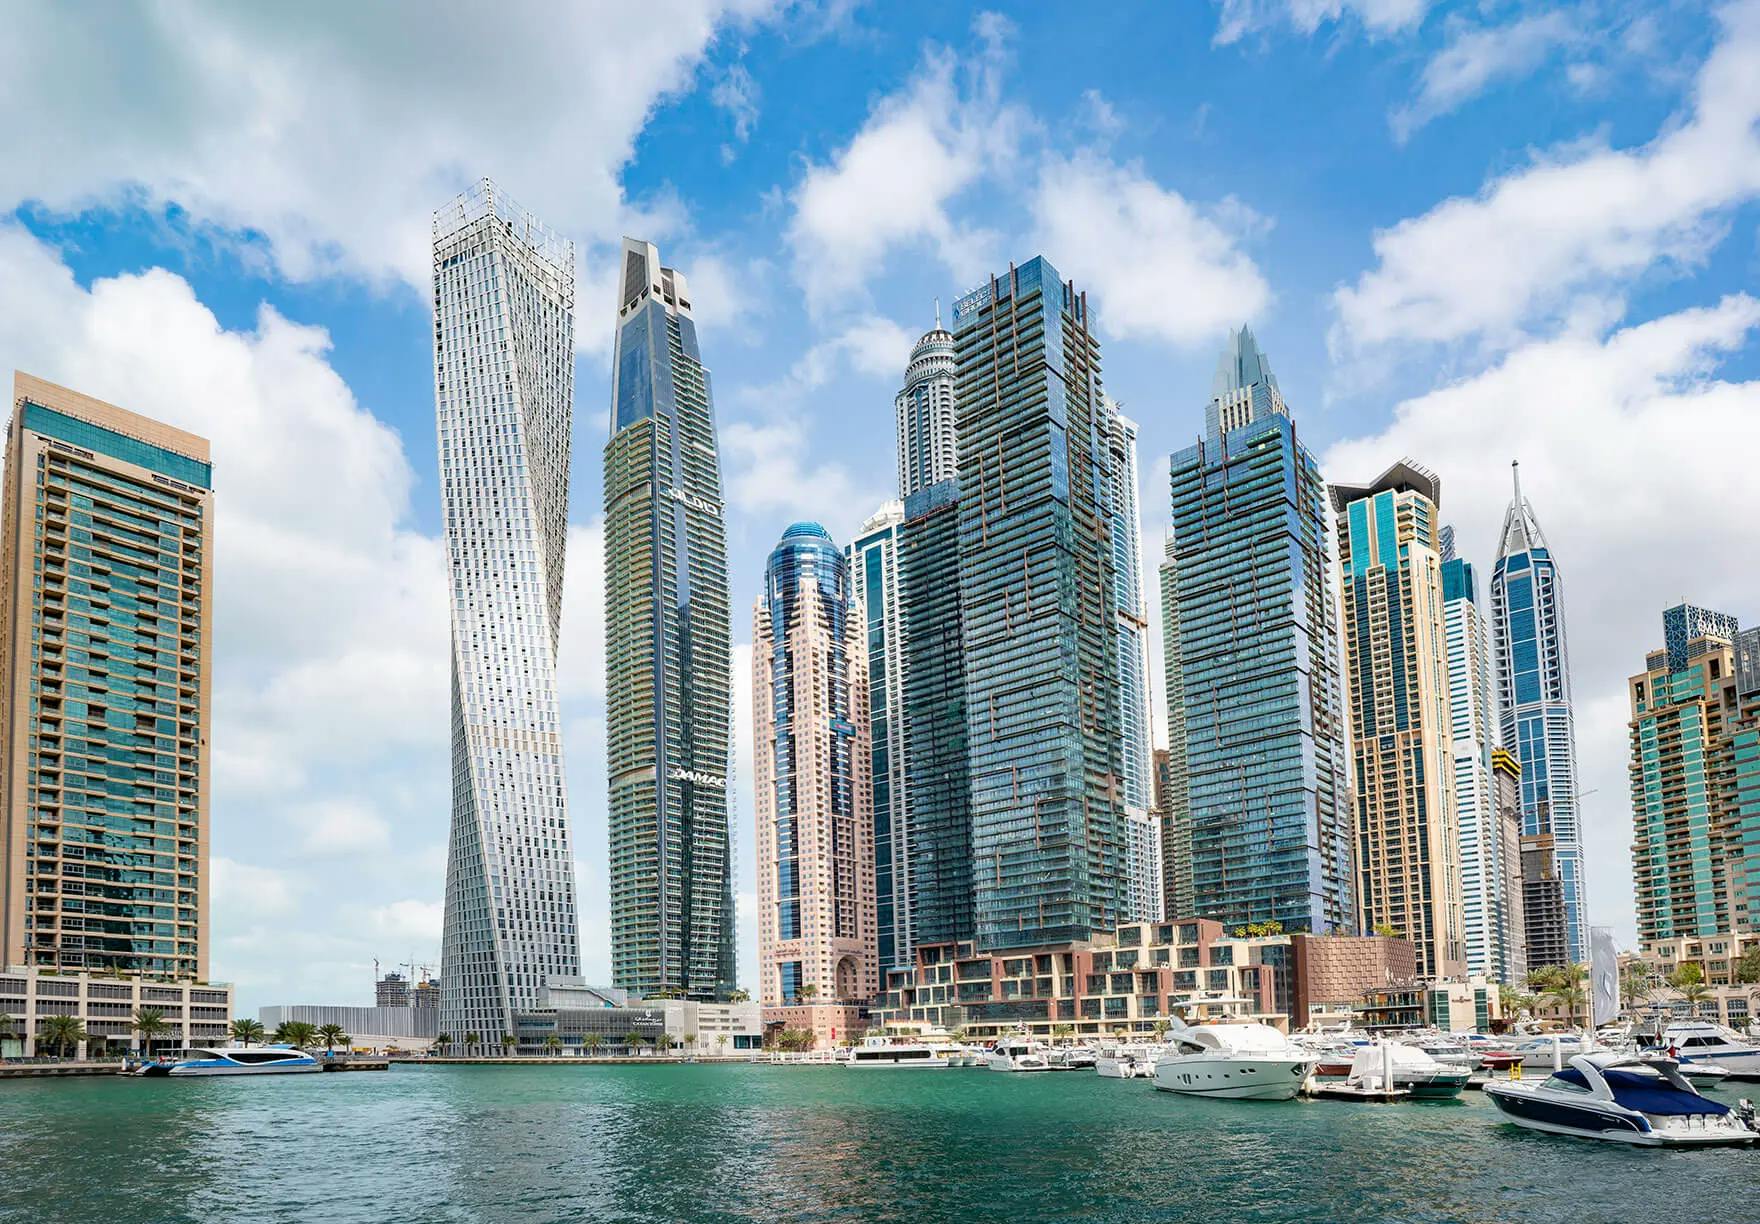 A shot of skyscraper buildings in Dubai